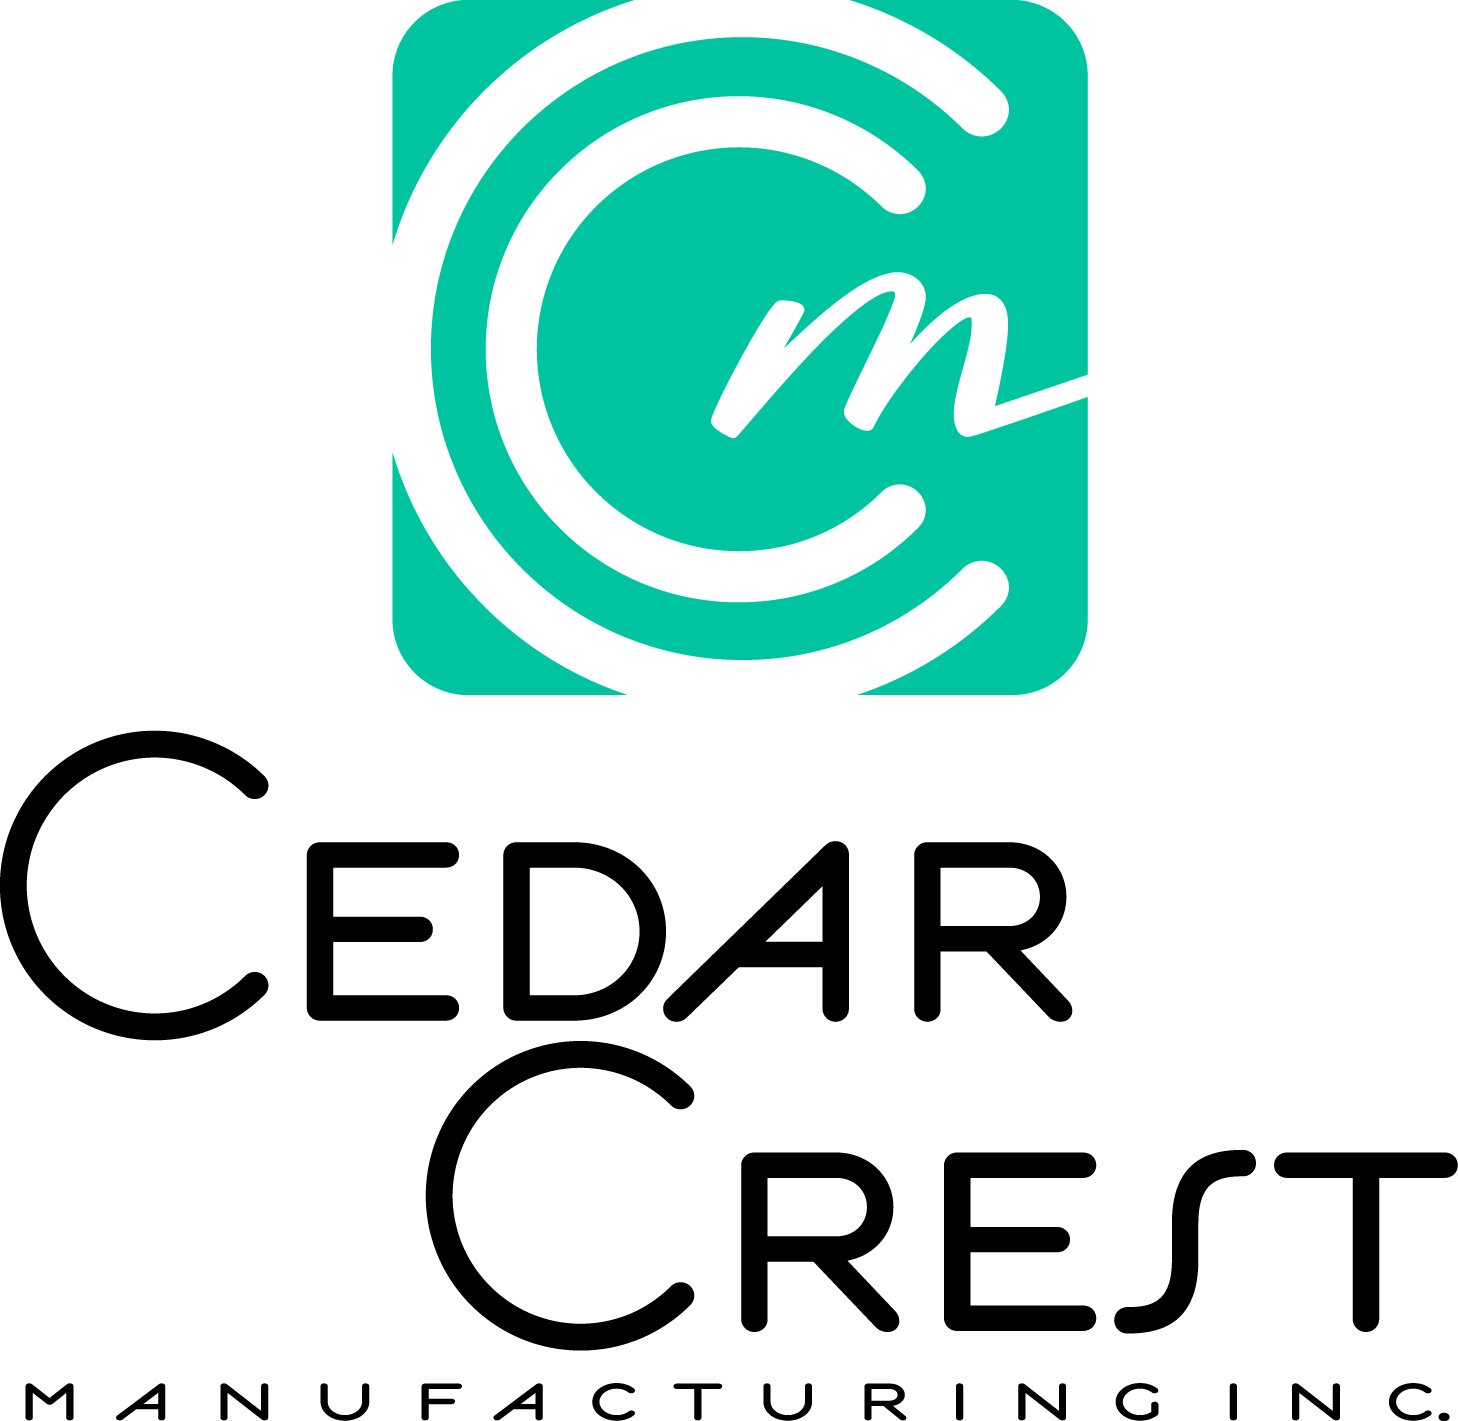 CCM logo_v cmyk.jpg